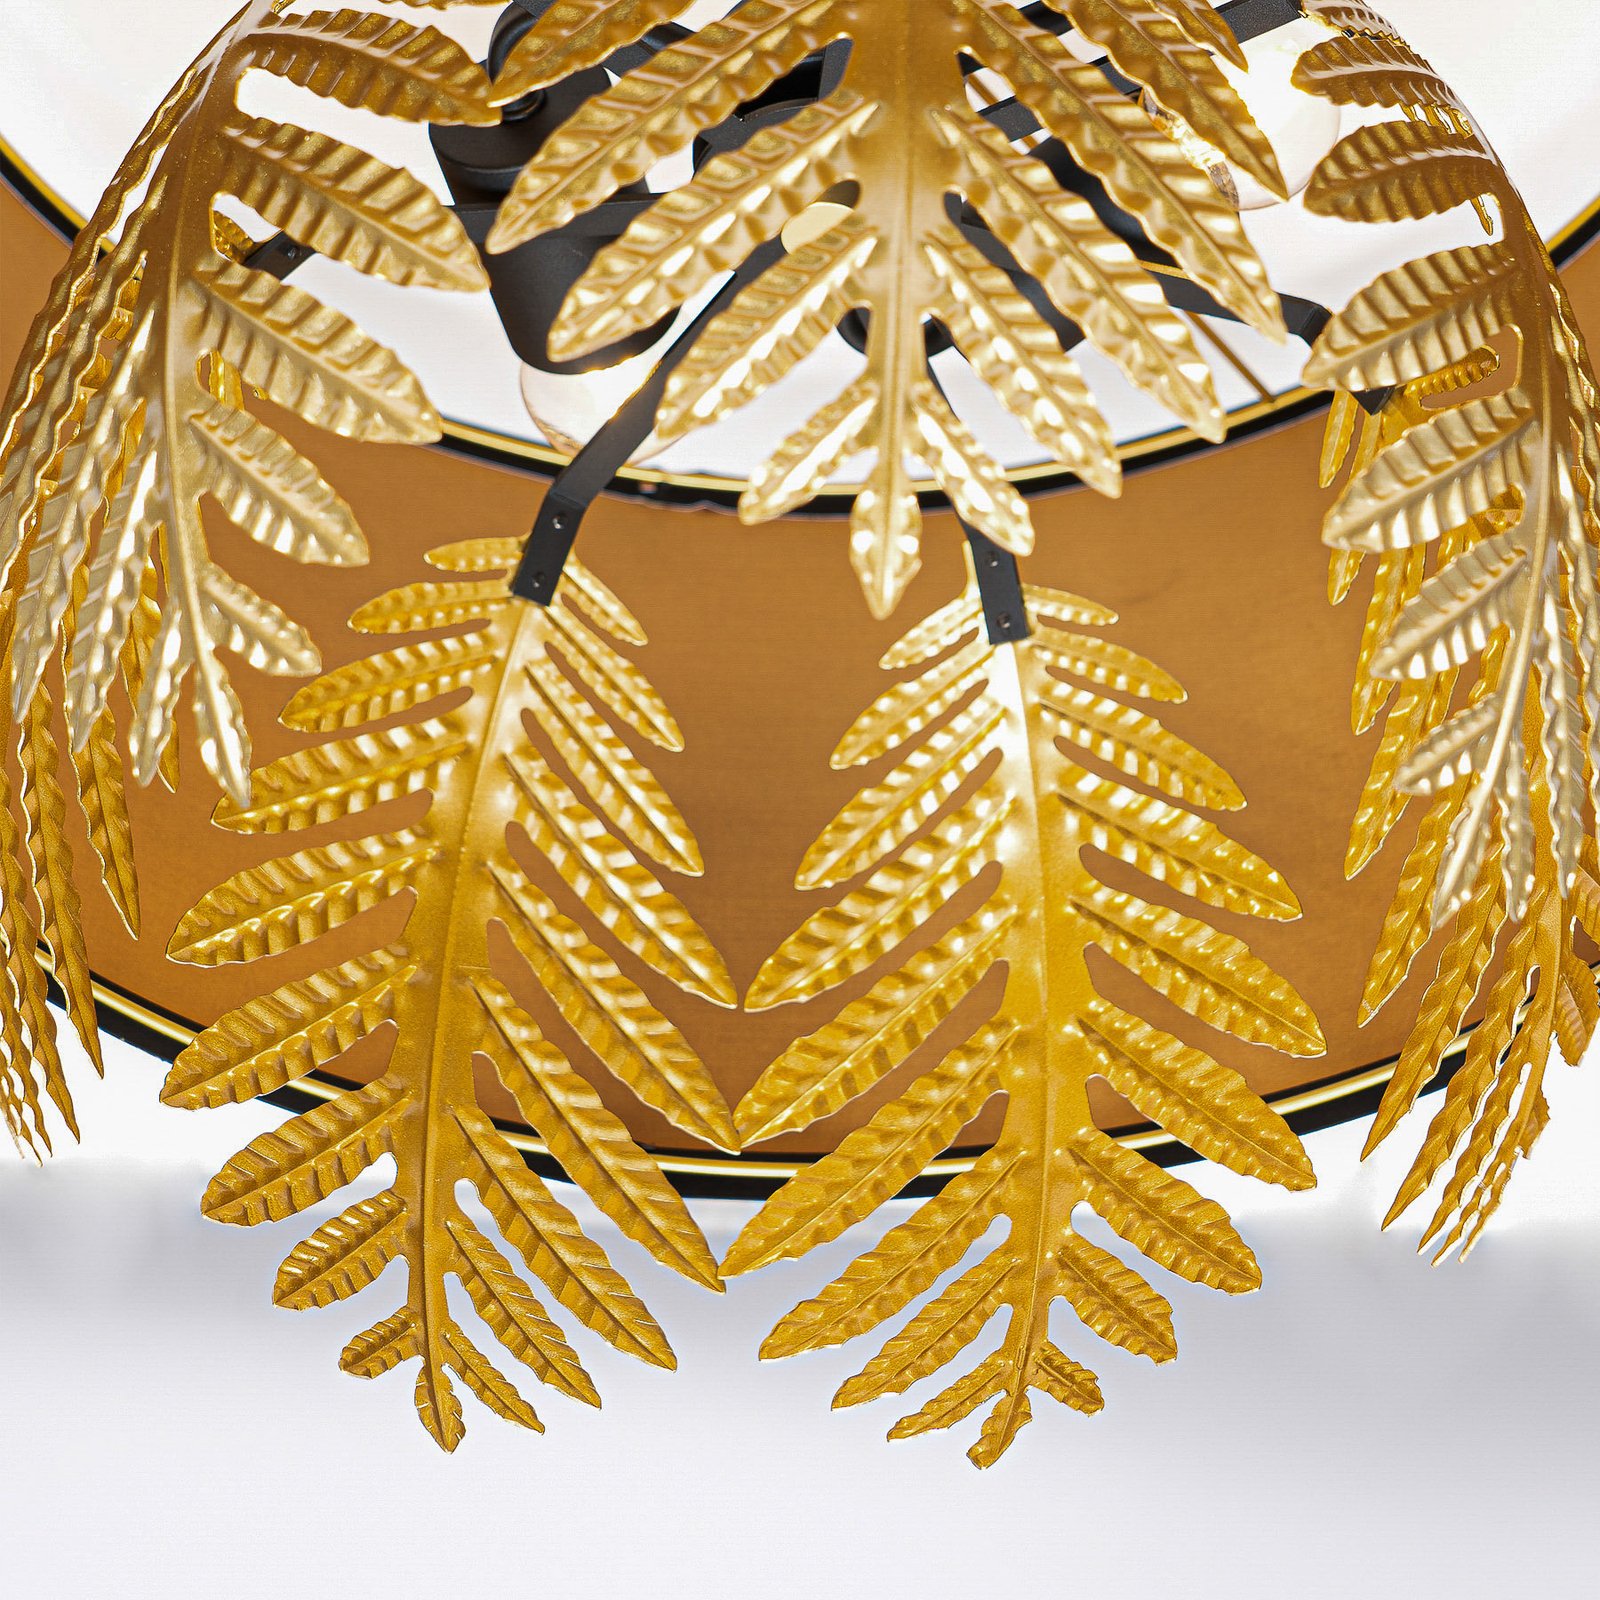 Lucande Malviras fabric ceiling lamp with leaf decoration